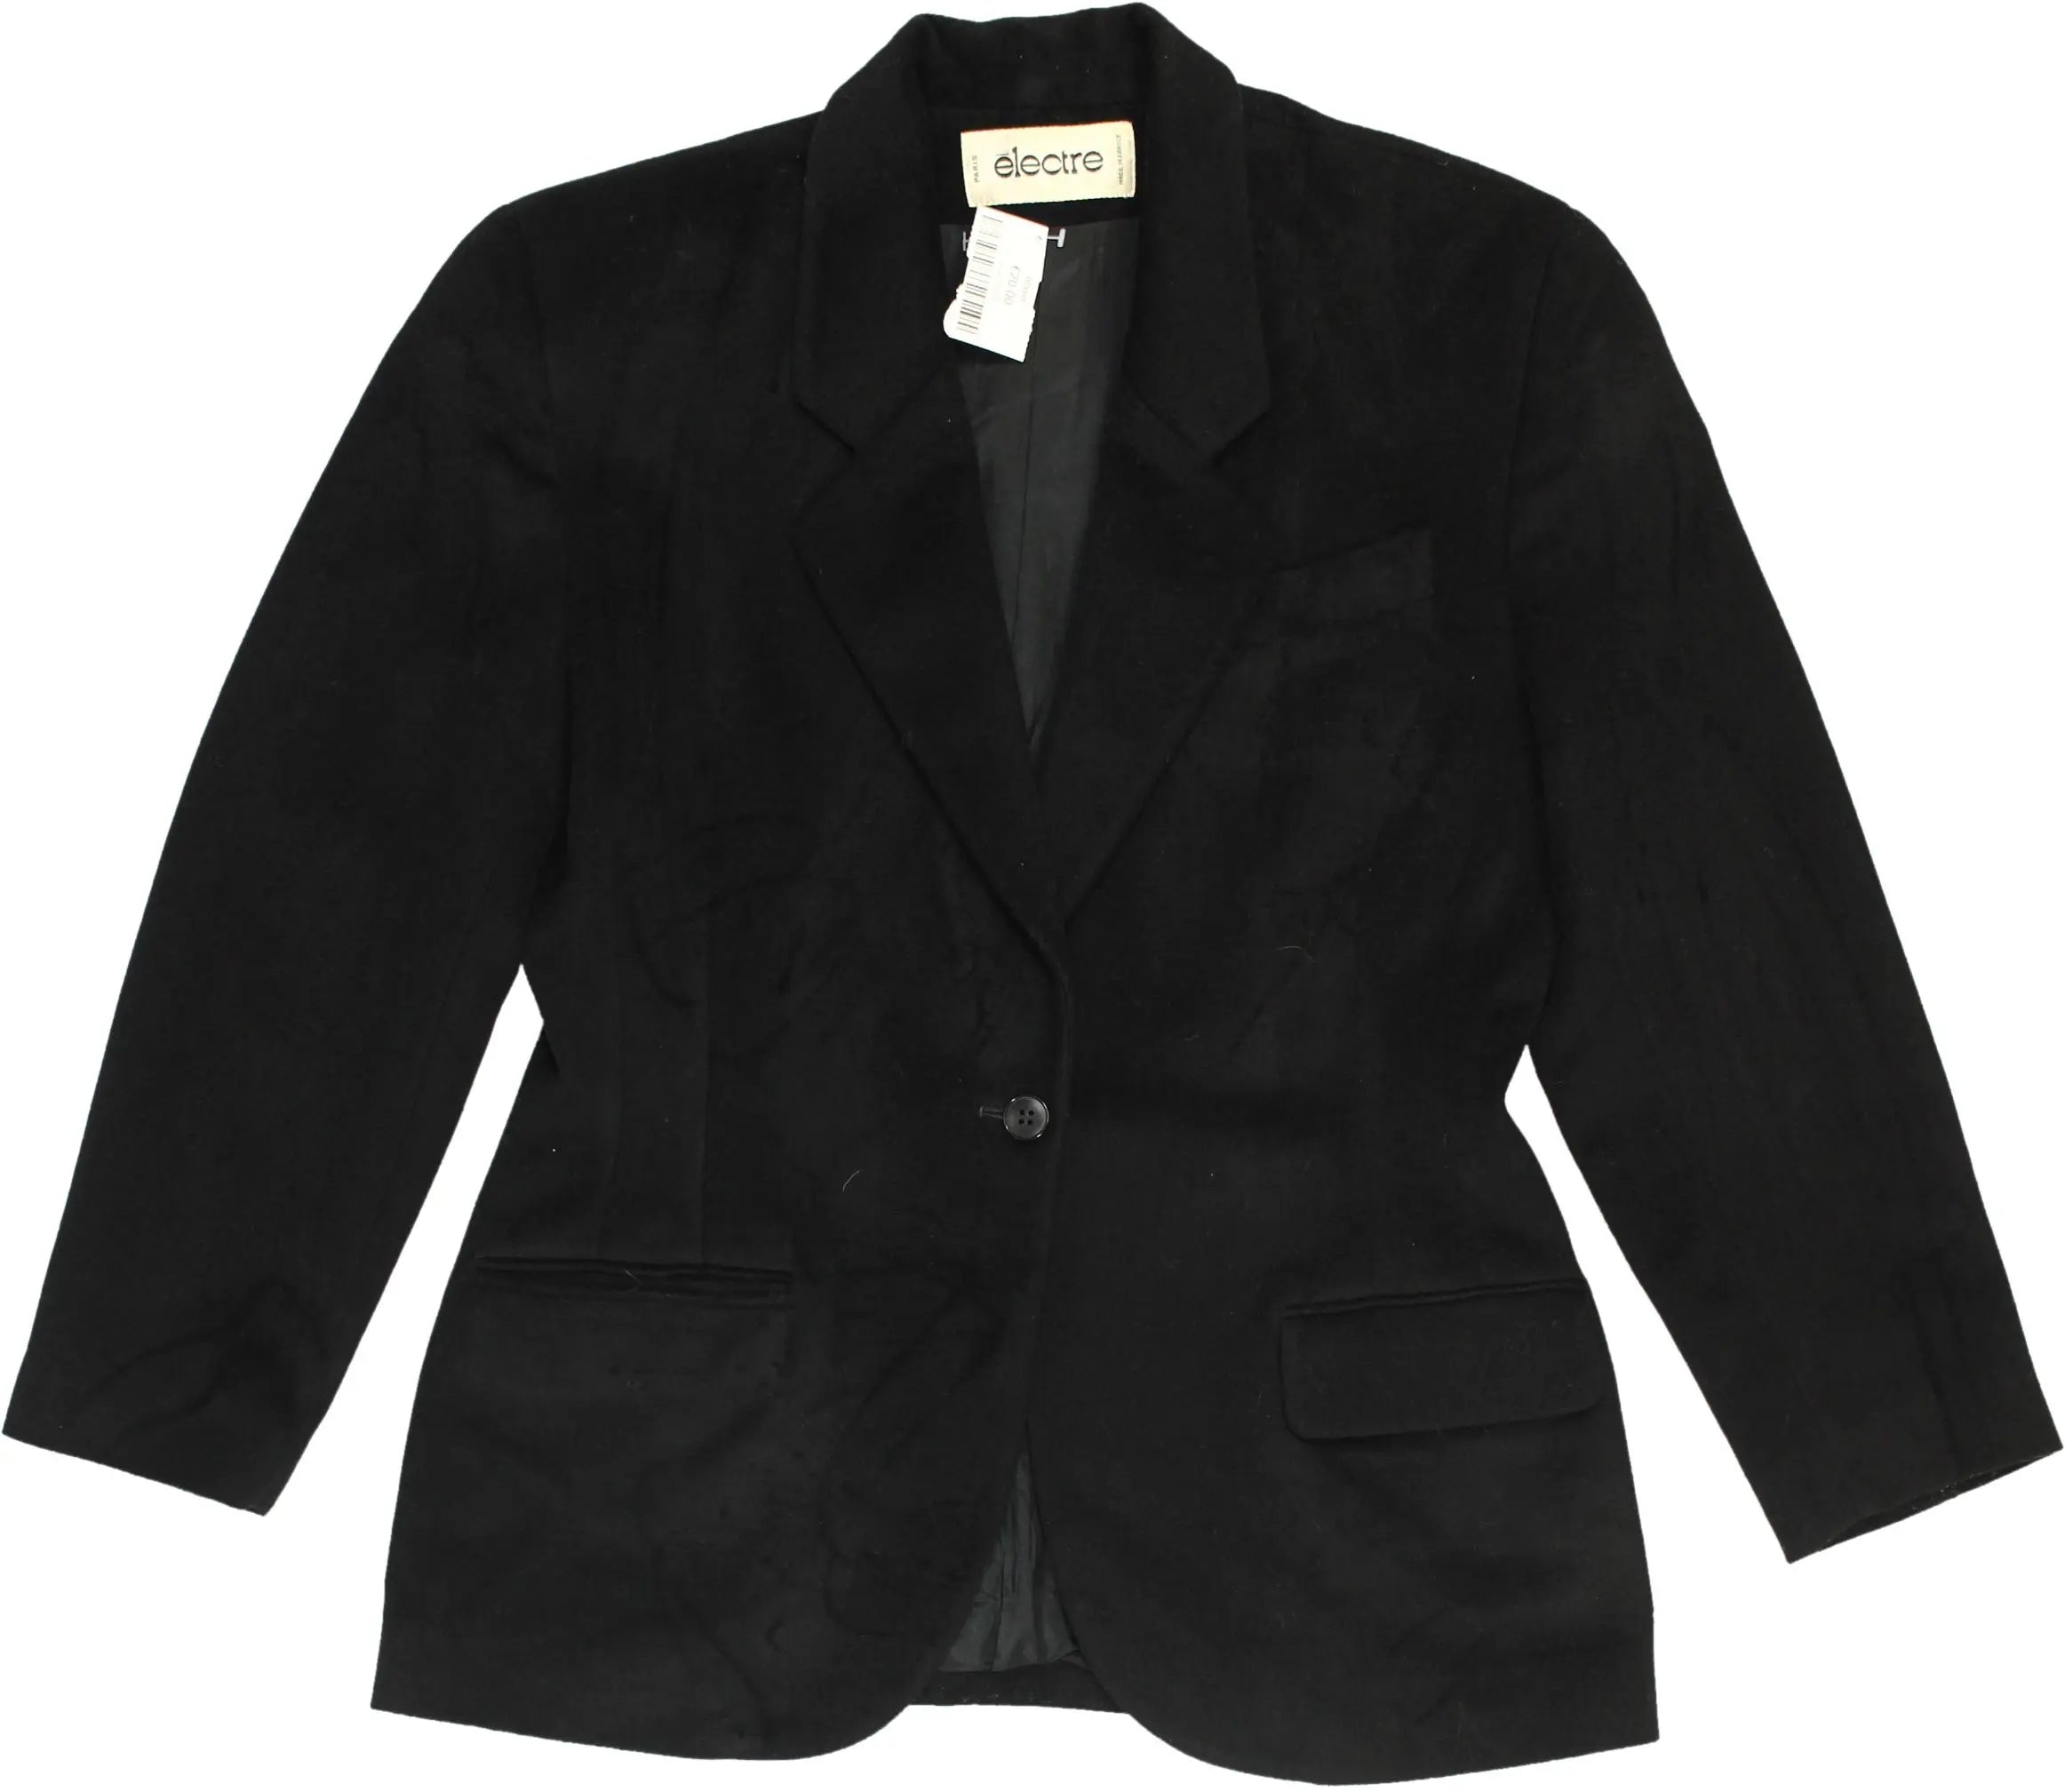 Electre - Black blazer- ThriftTale.com - Vintage and second handclothing